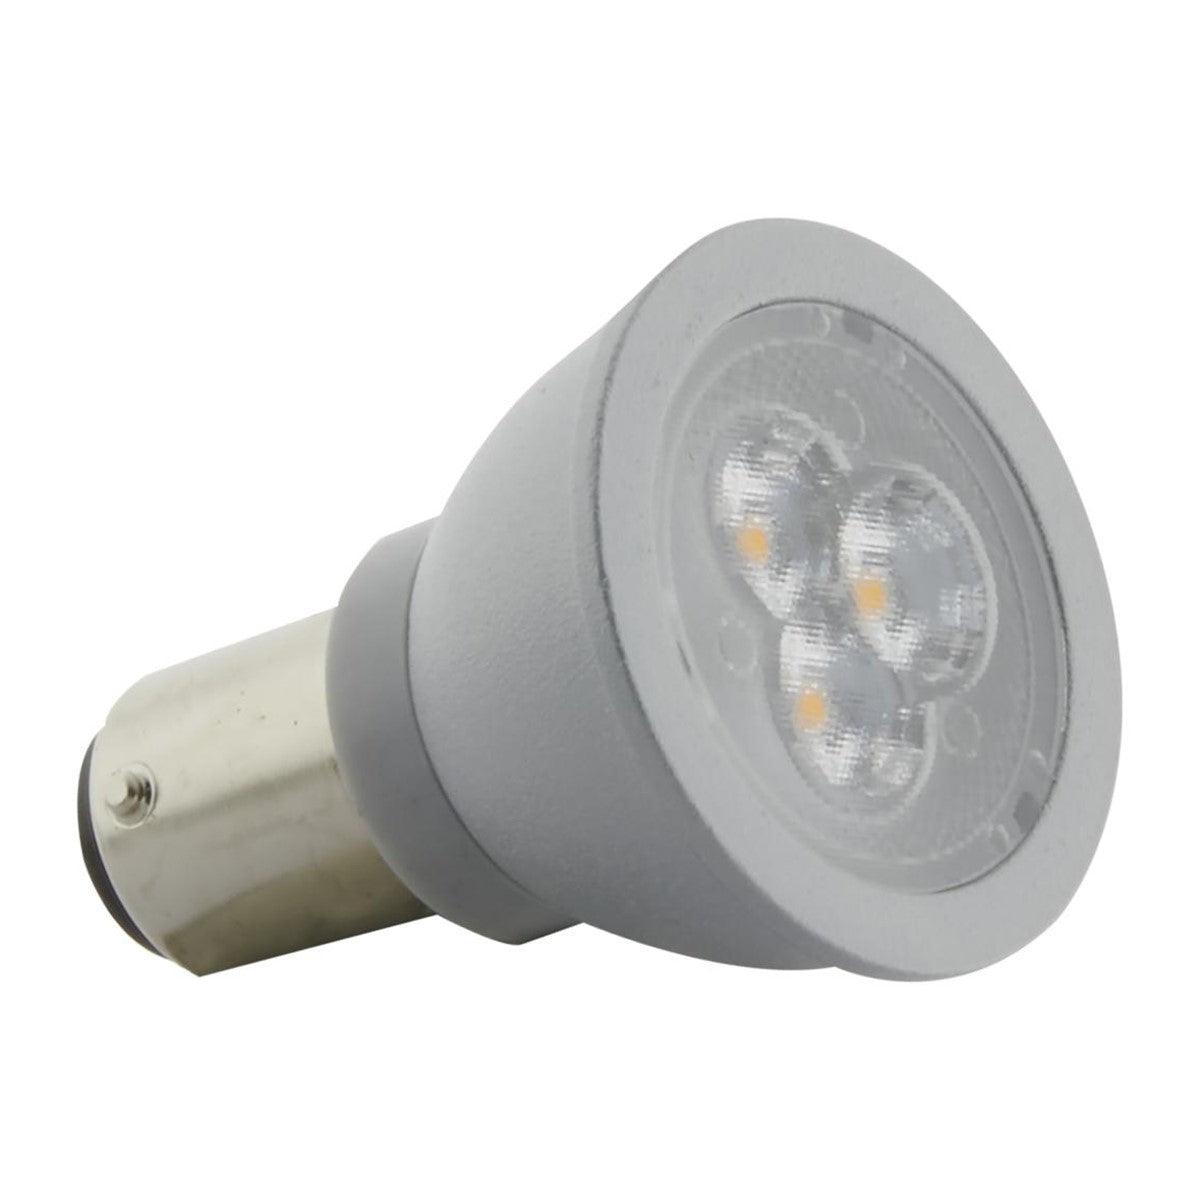 LED ALR12 Reflector bulb, 3 watt, 220 Lumens, 3000K, BA15d Double Bayonet Base, 31 Deg. Flood